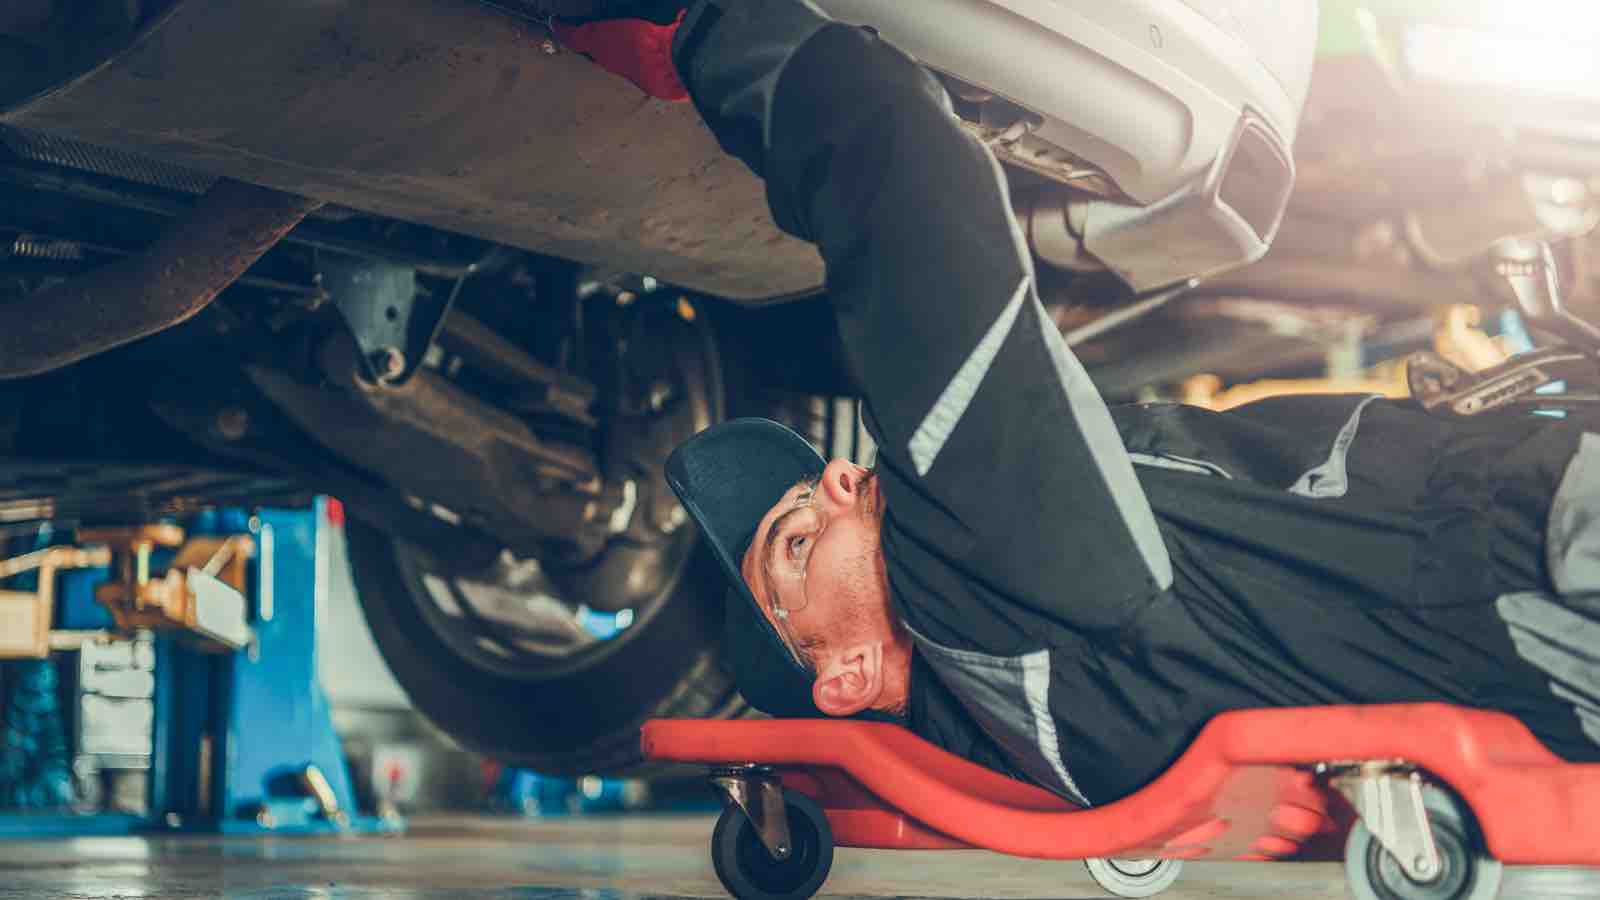 Mechanic working under a car